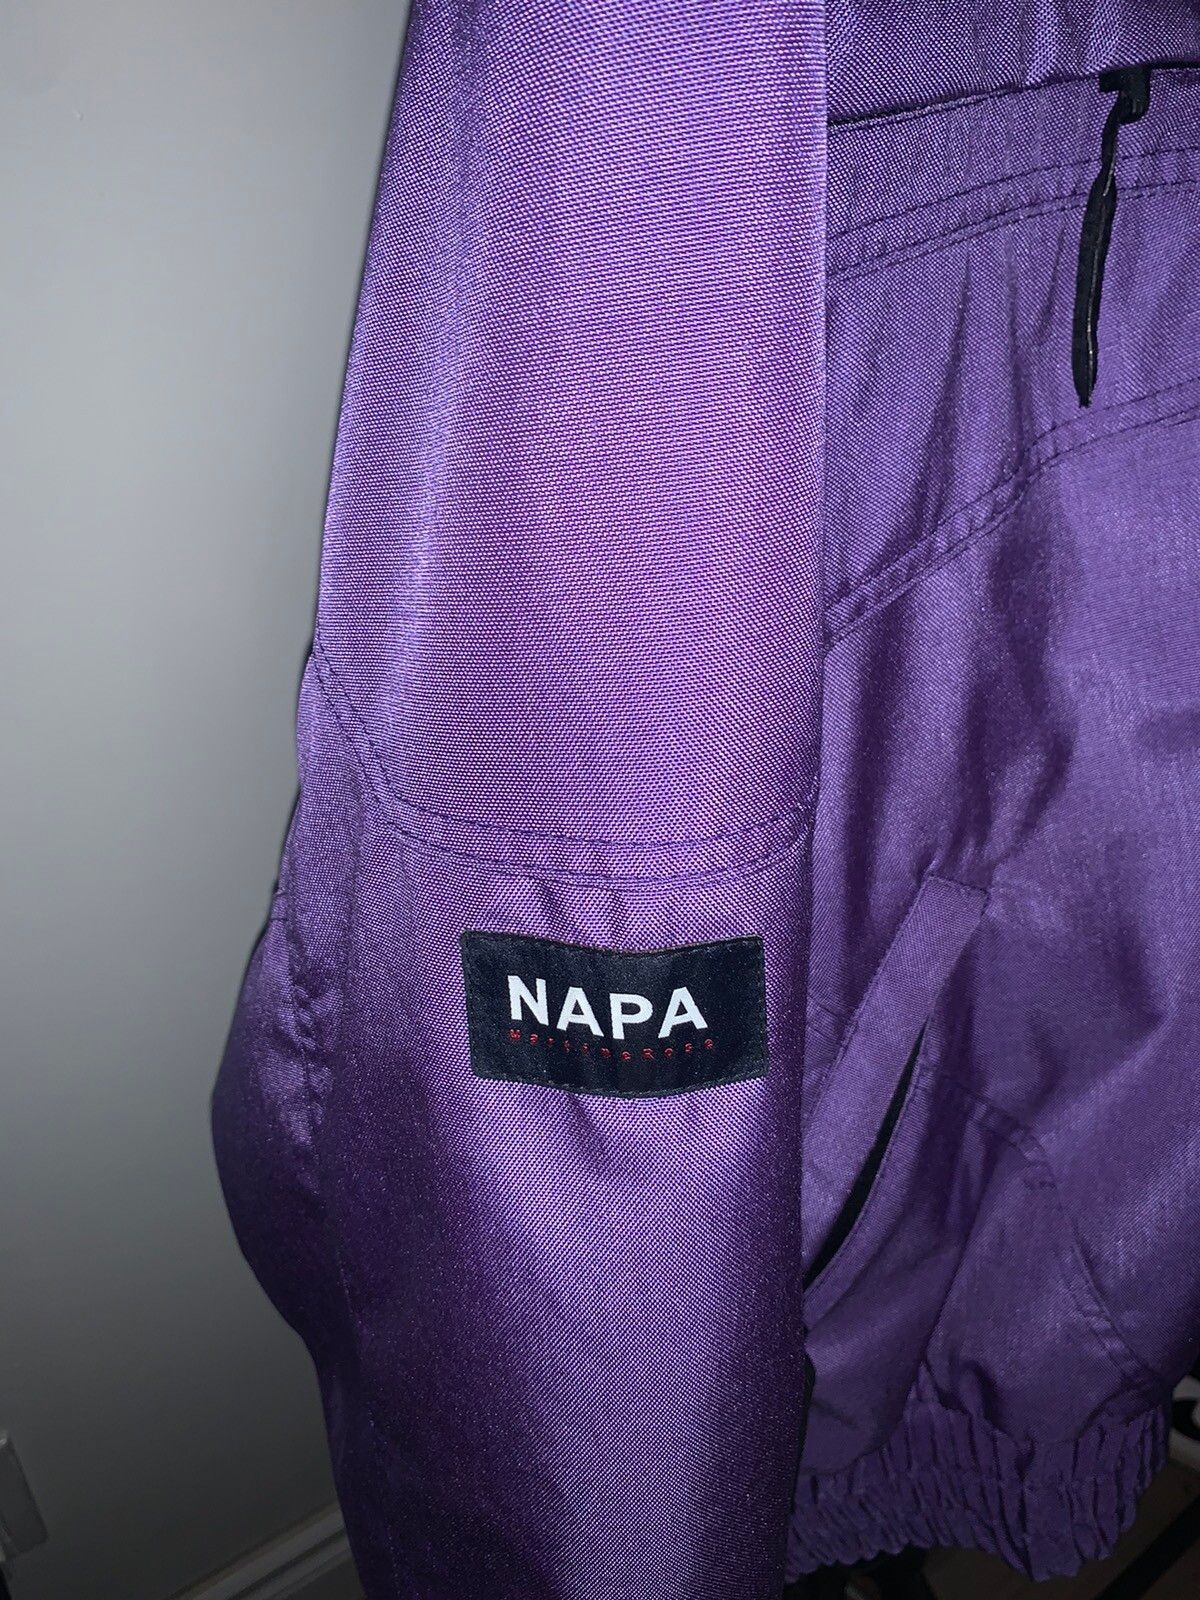 Napapijri Napa By Martine Rose Jacket Size US M / EU 48-50 / 2 - 3 Thumbnail